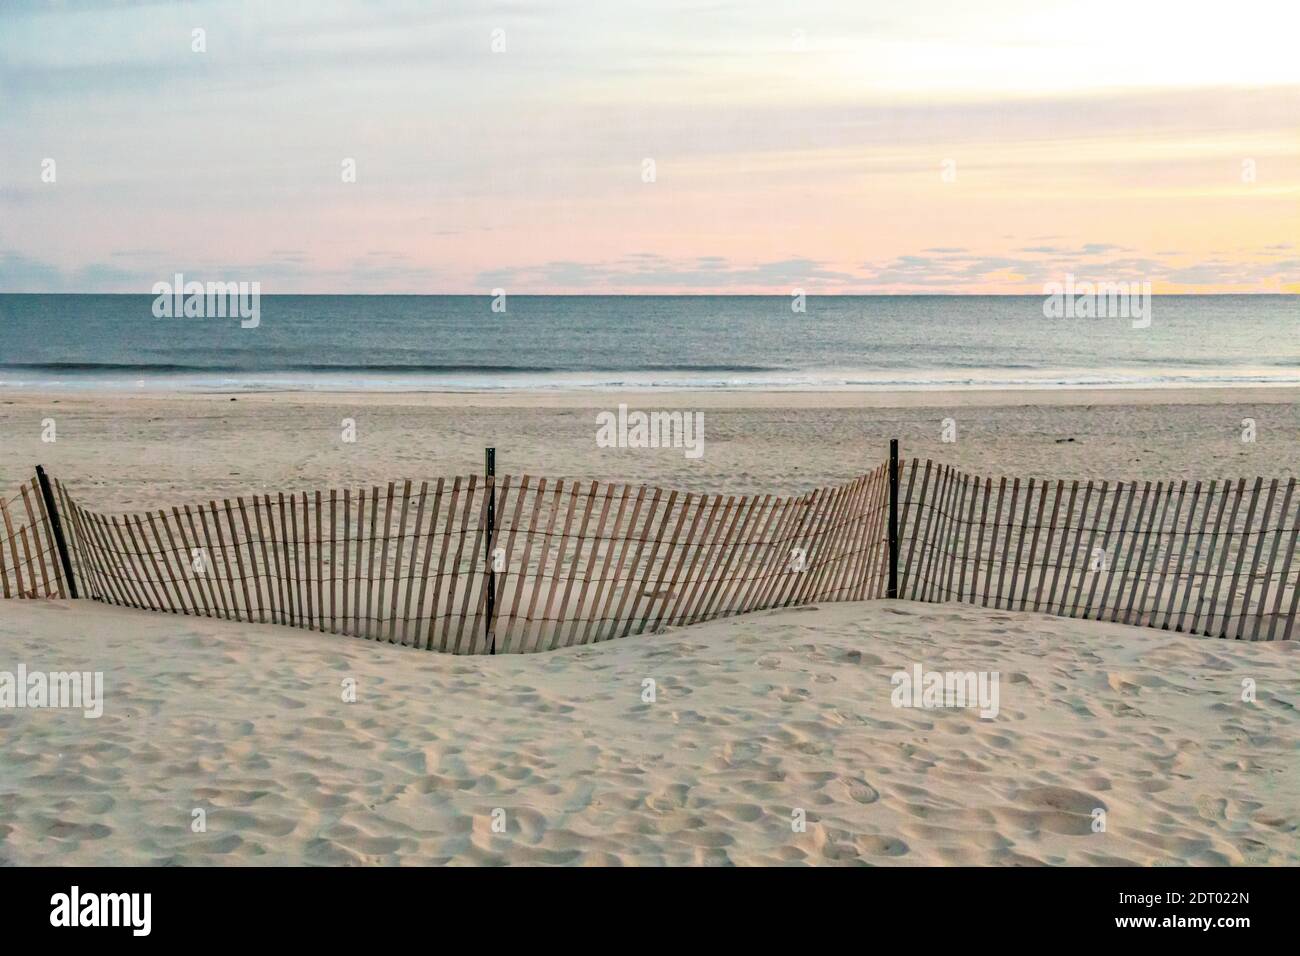 Landschaft mit Strandfechten und dem Atlantik dahinter, Southampton, NY Stockfoto